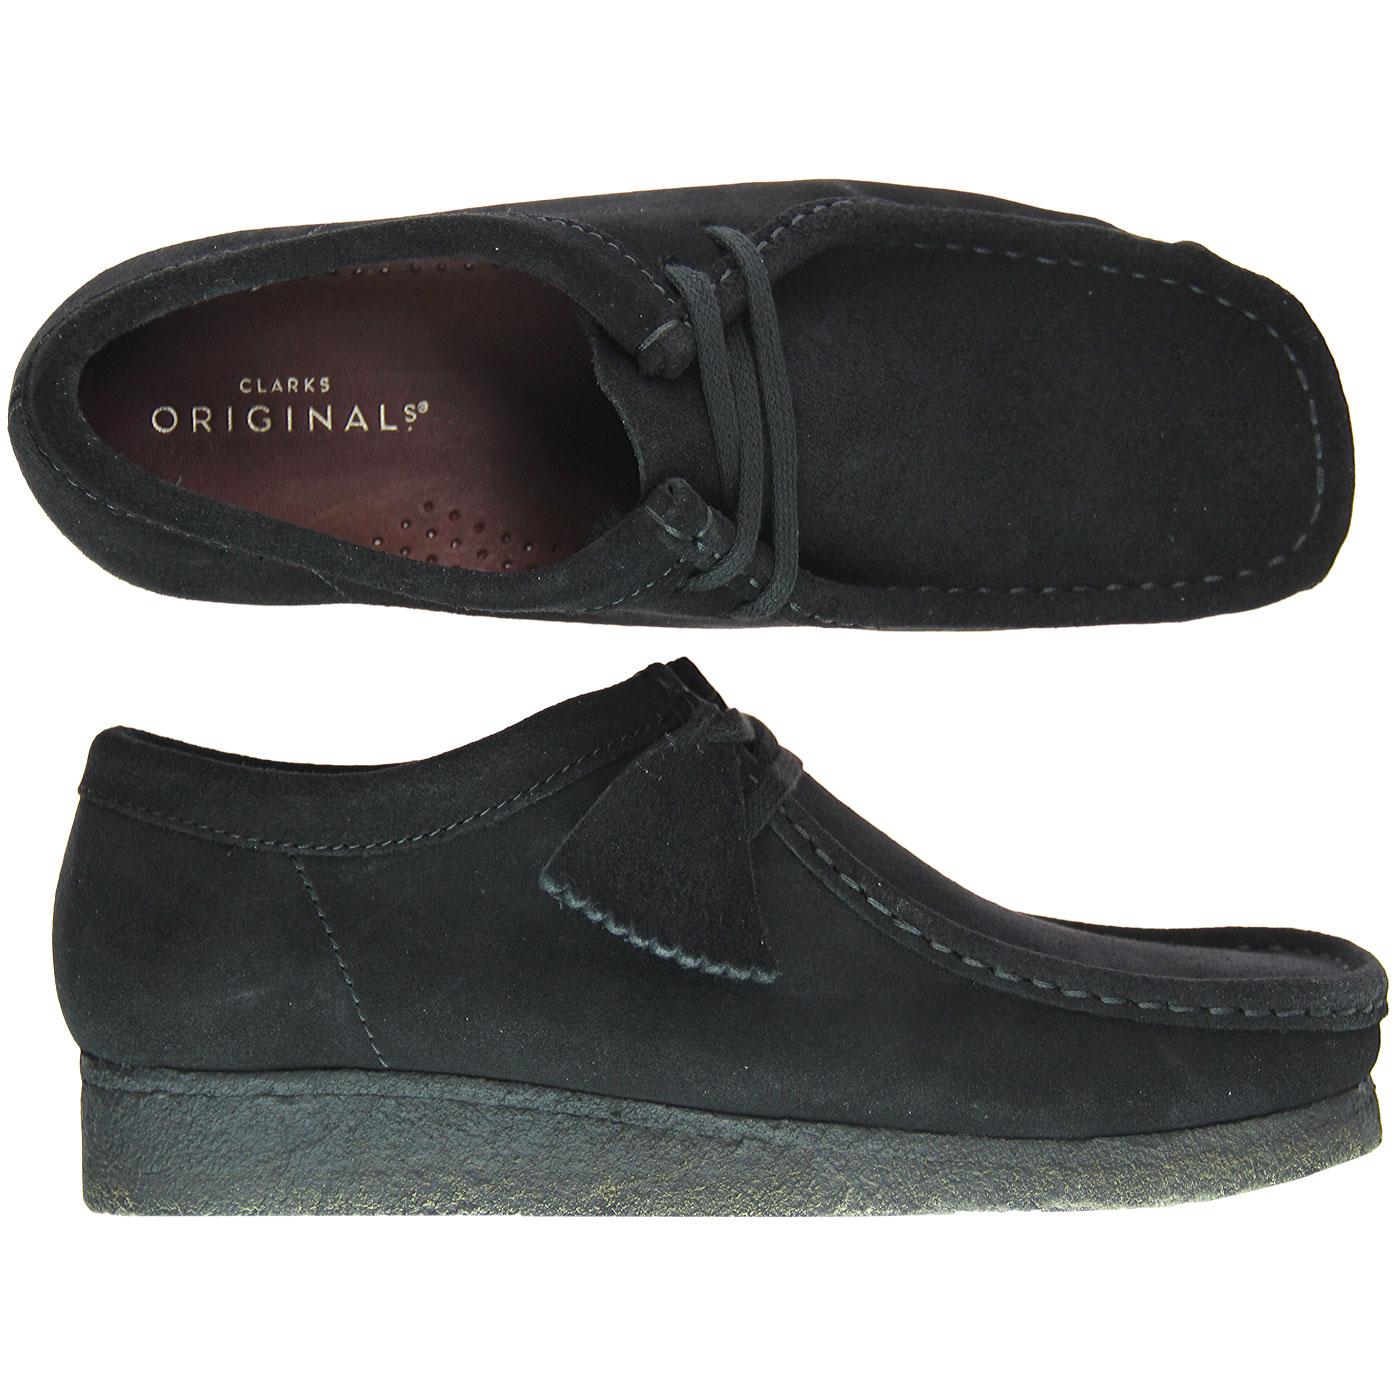 CLARKS ORIGINALS Wallabee Mod Moccasin Shoes in Black